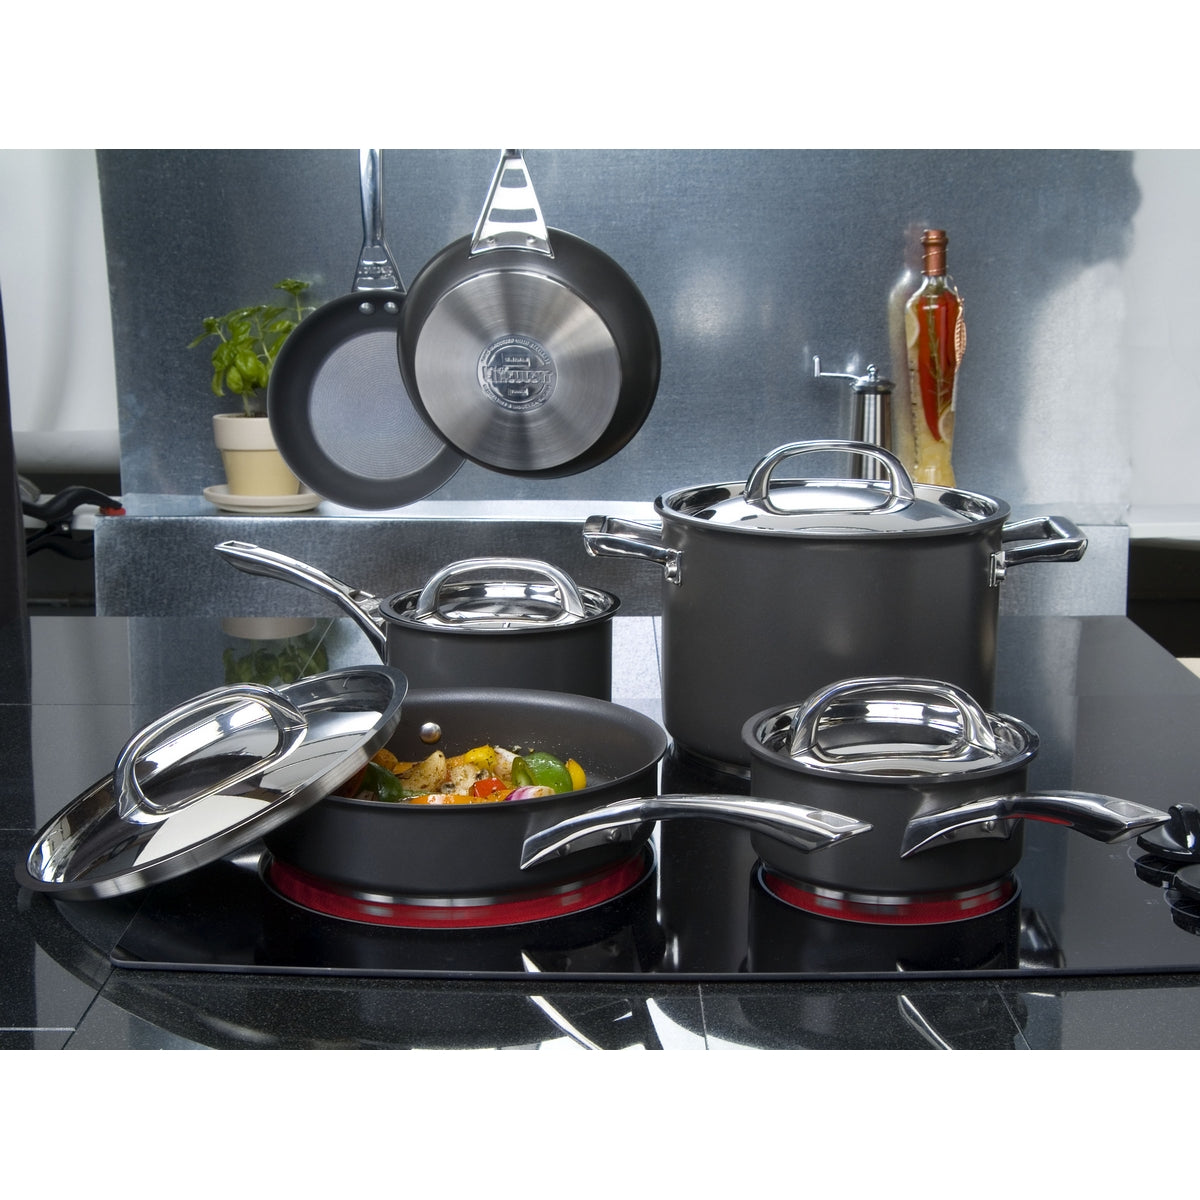  Circulon Infinite Saucepans and Frypan, 24cm, Black: Stockpots:  Home & Kitchen